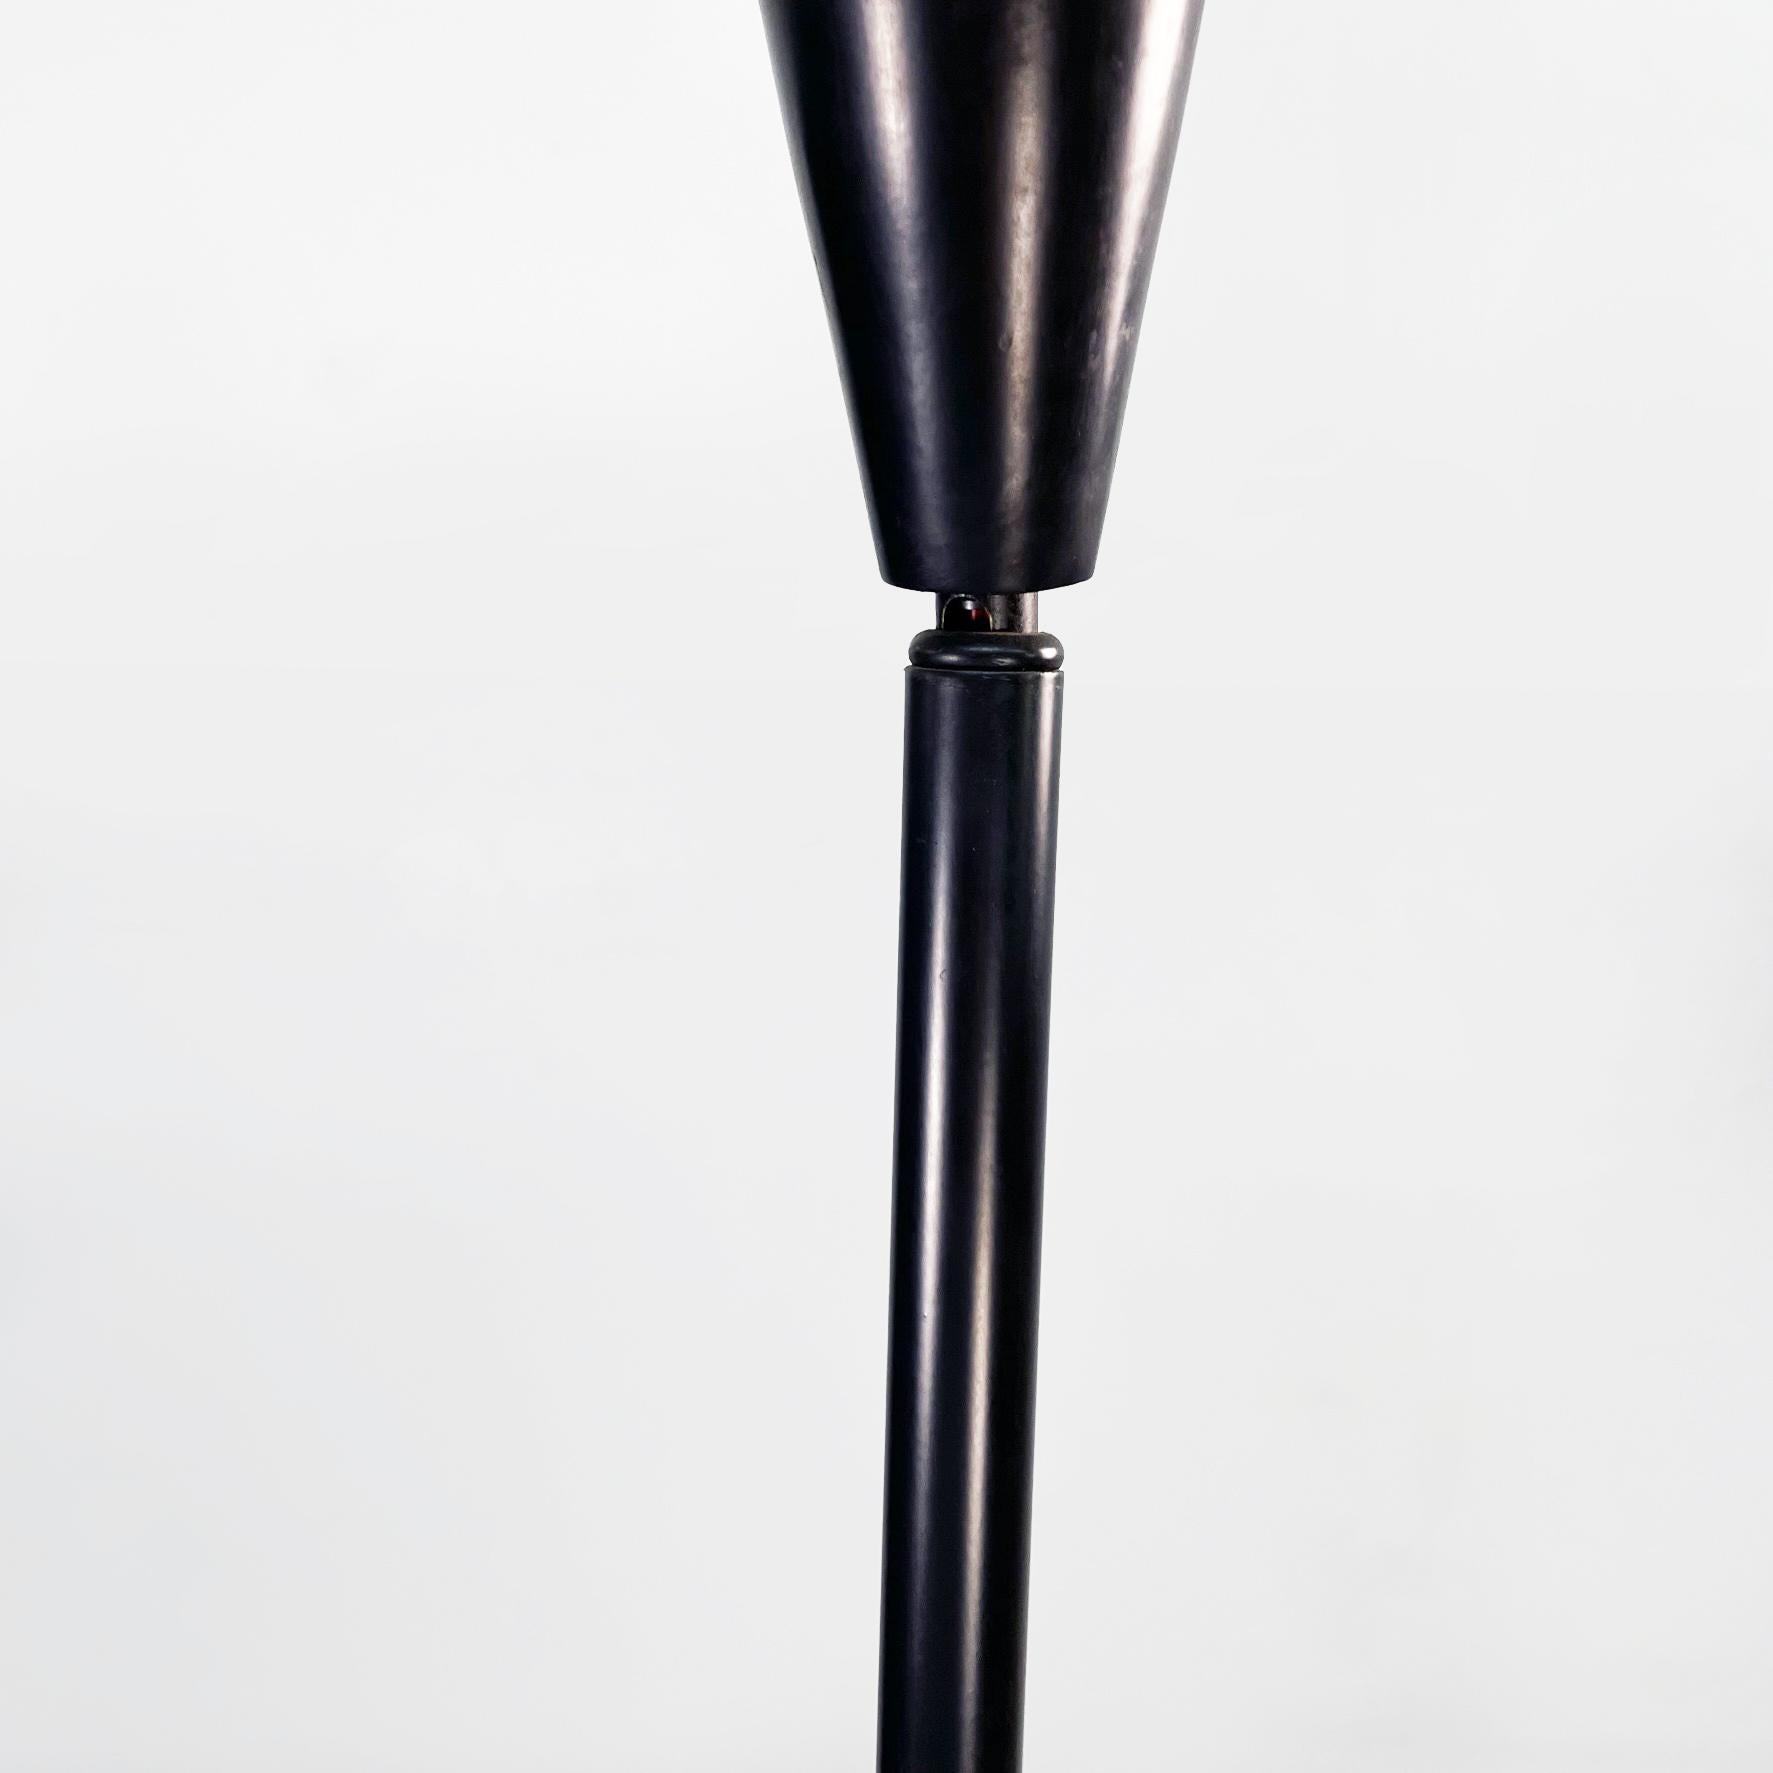 Italian Modern Floor Lamp Whit Two Light Adjustable in Black Metal, 1990s For Sale 2